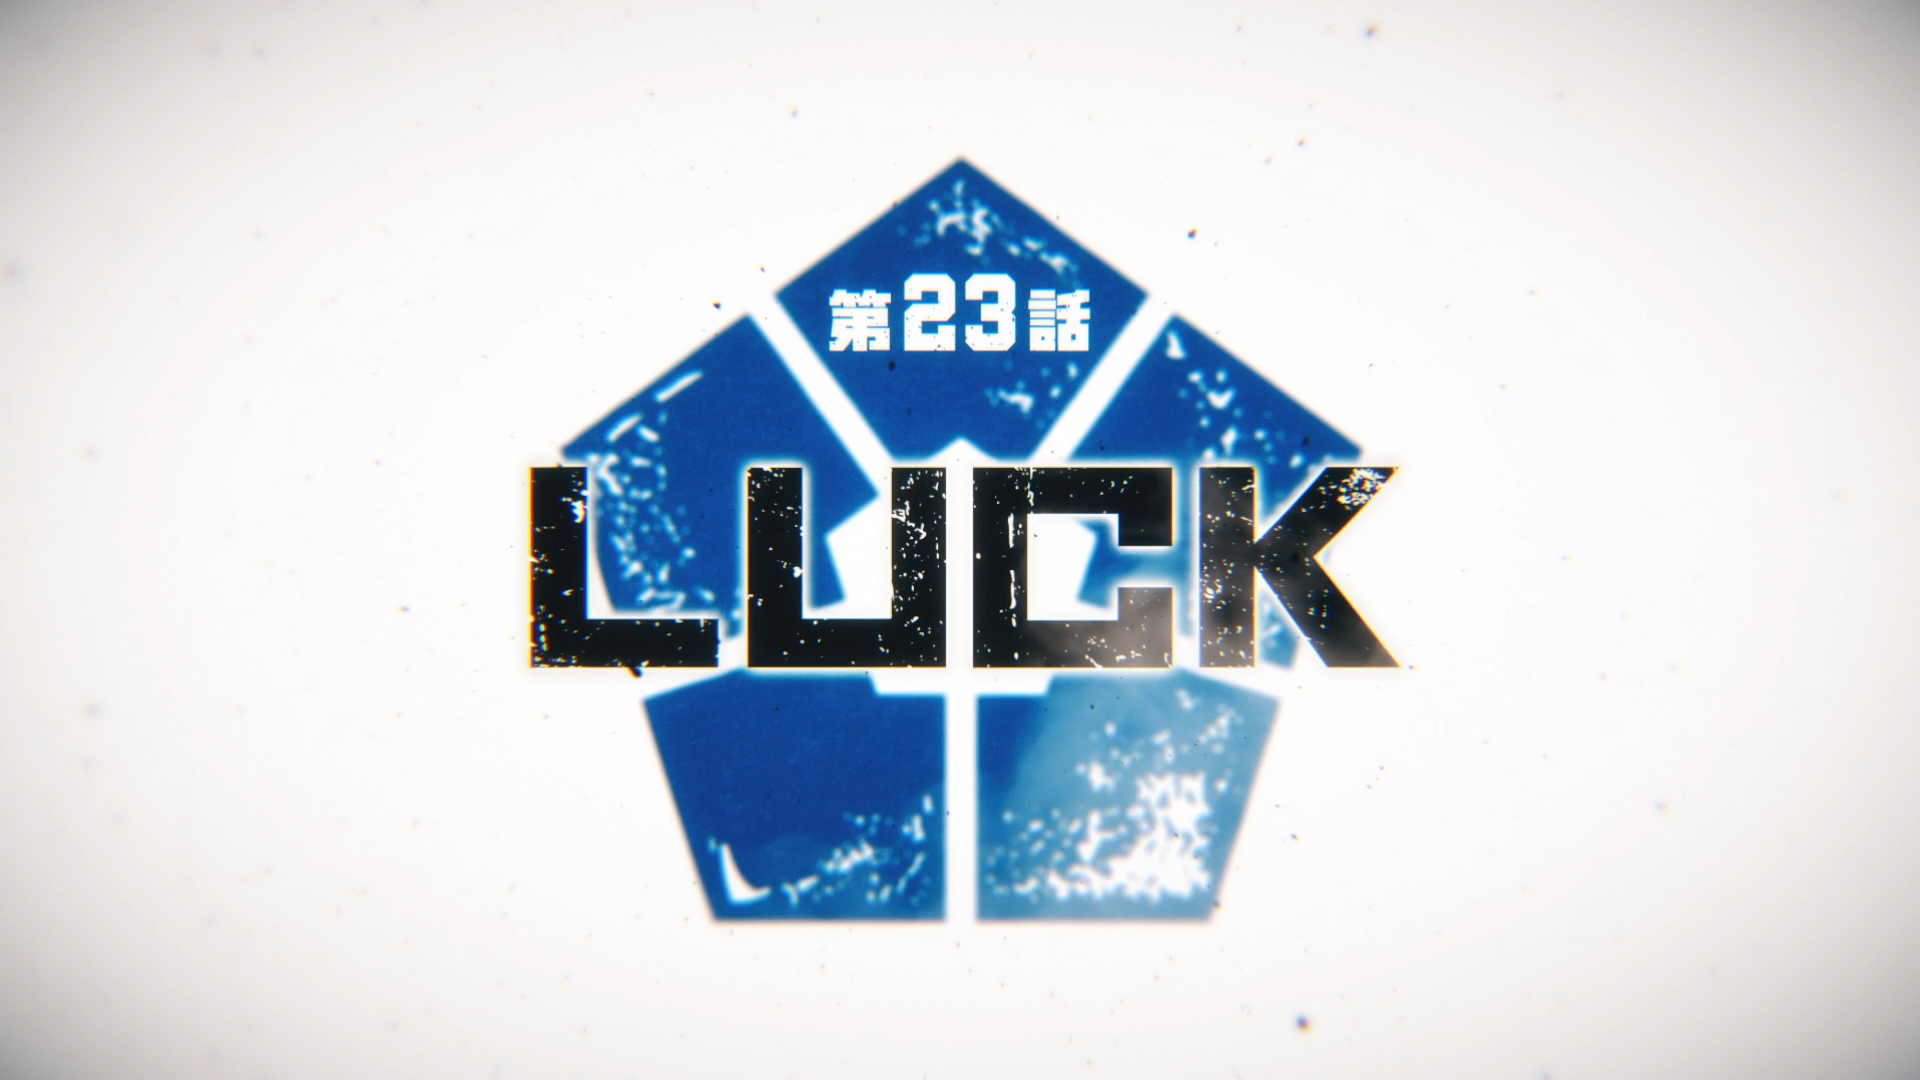 LUCK  Blue Lock Episode 23 Reaction 